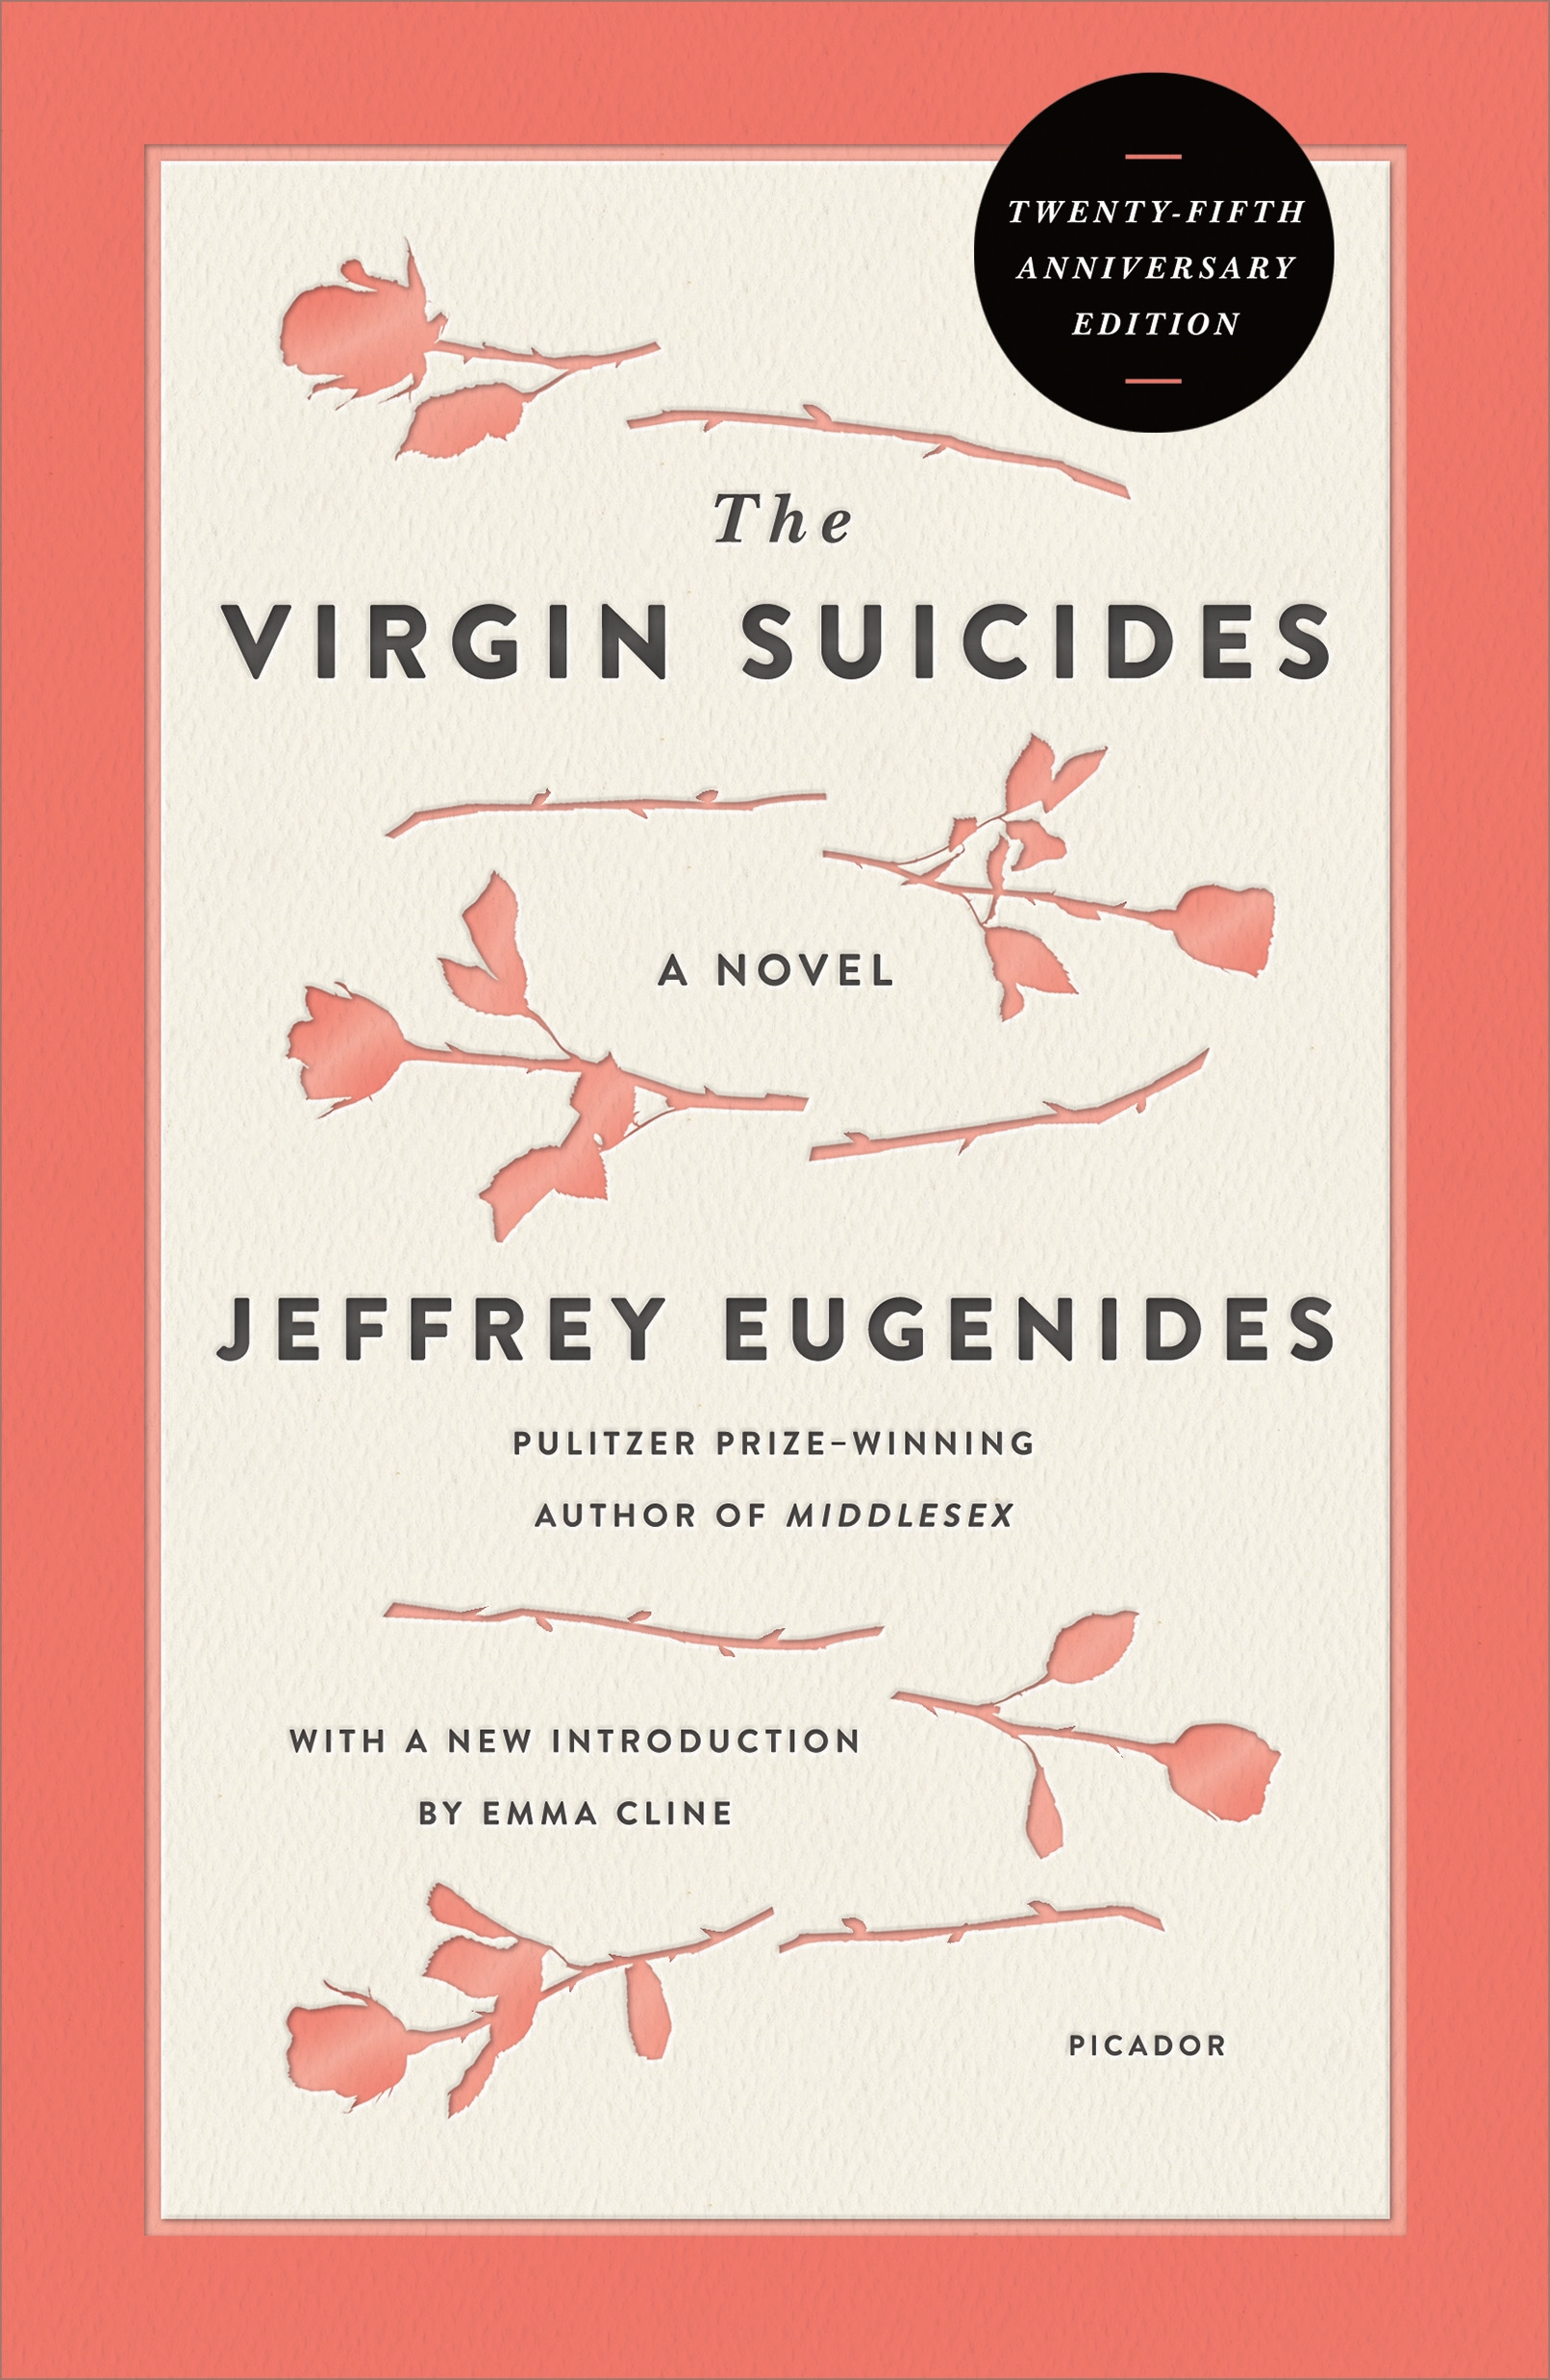 Book “The Virgin Suicides (Twenty-Fifth Anniversary Edition)” by Jeffrey Eugenides — October 2, 2018